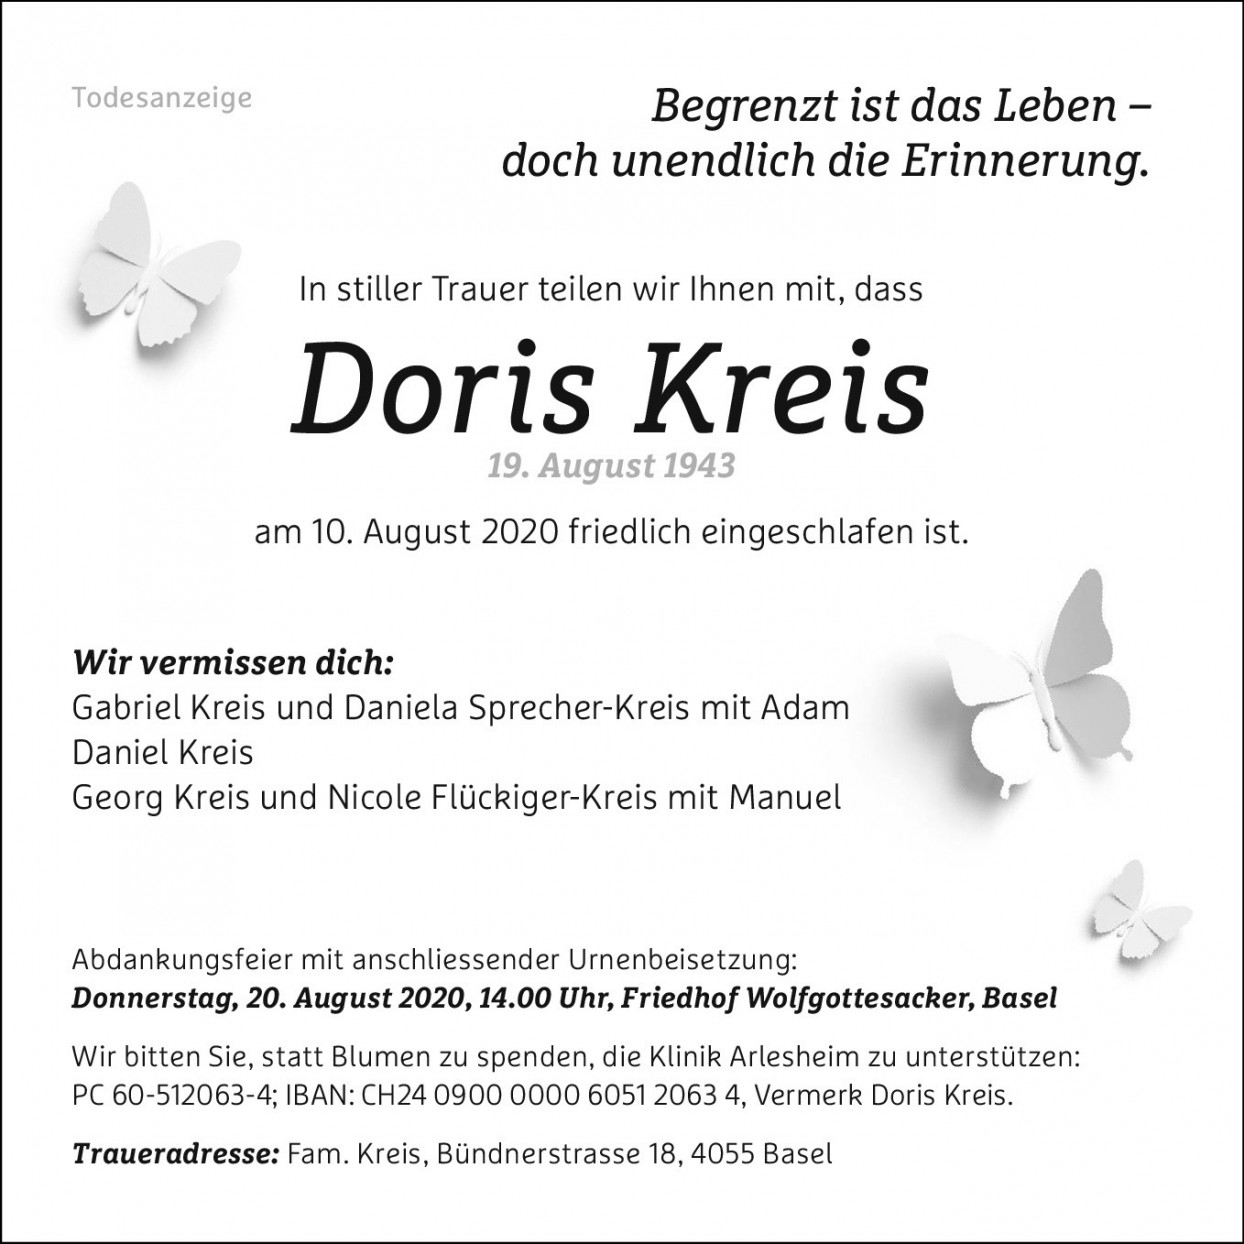 Doris Kreis